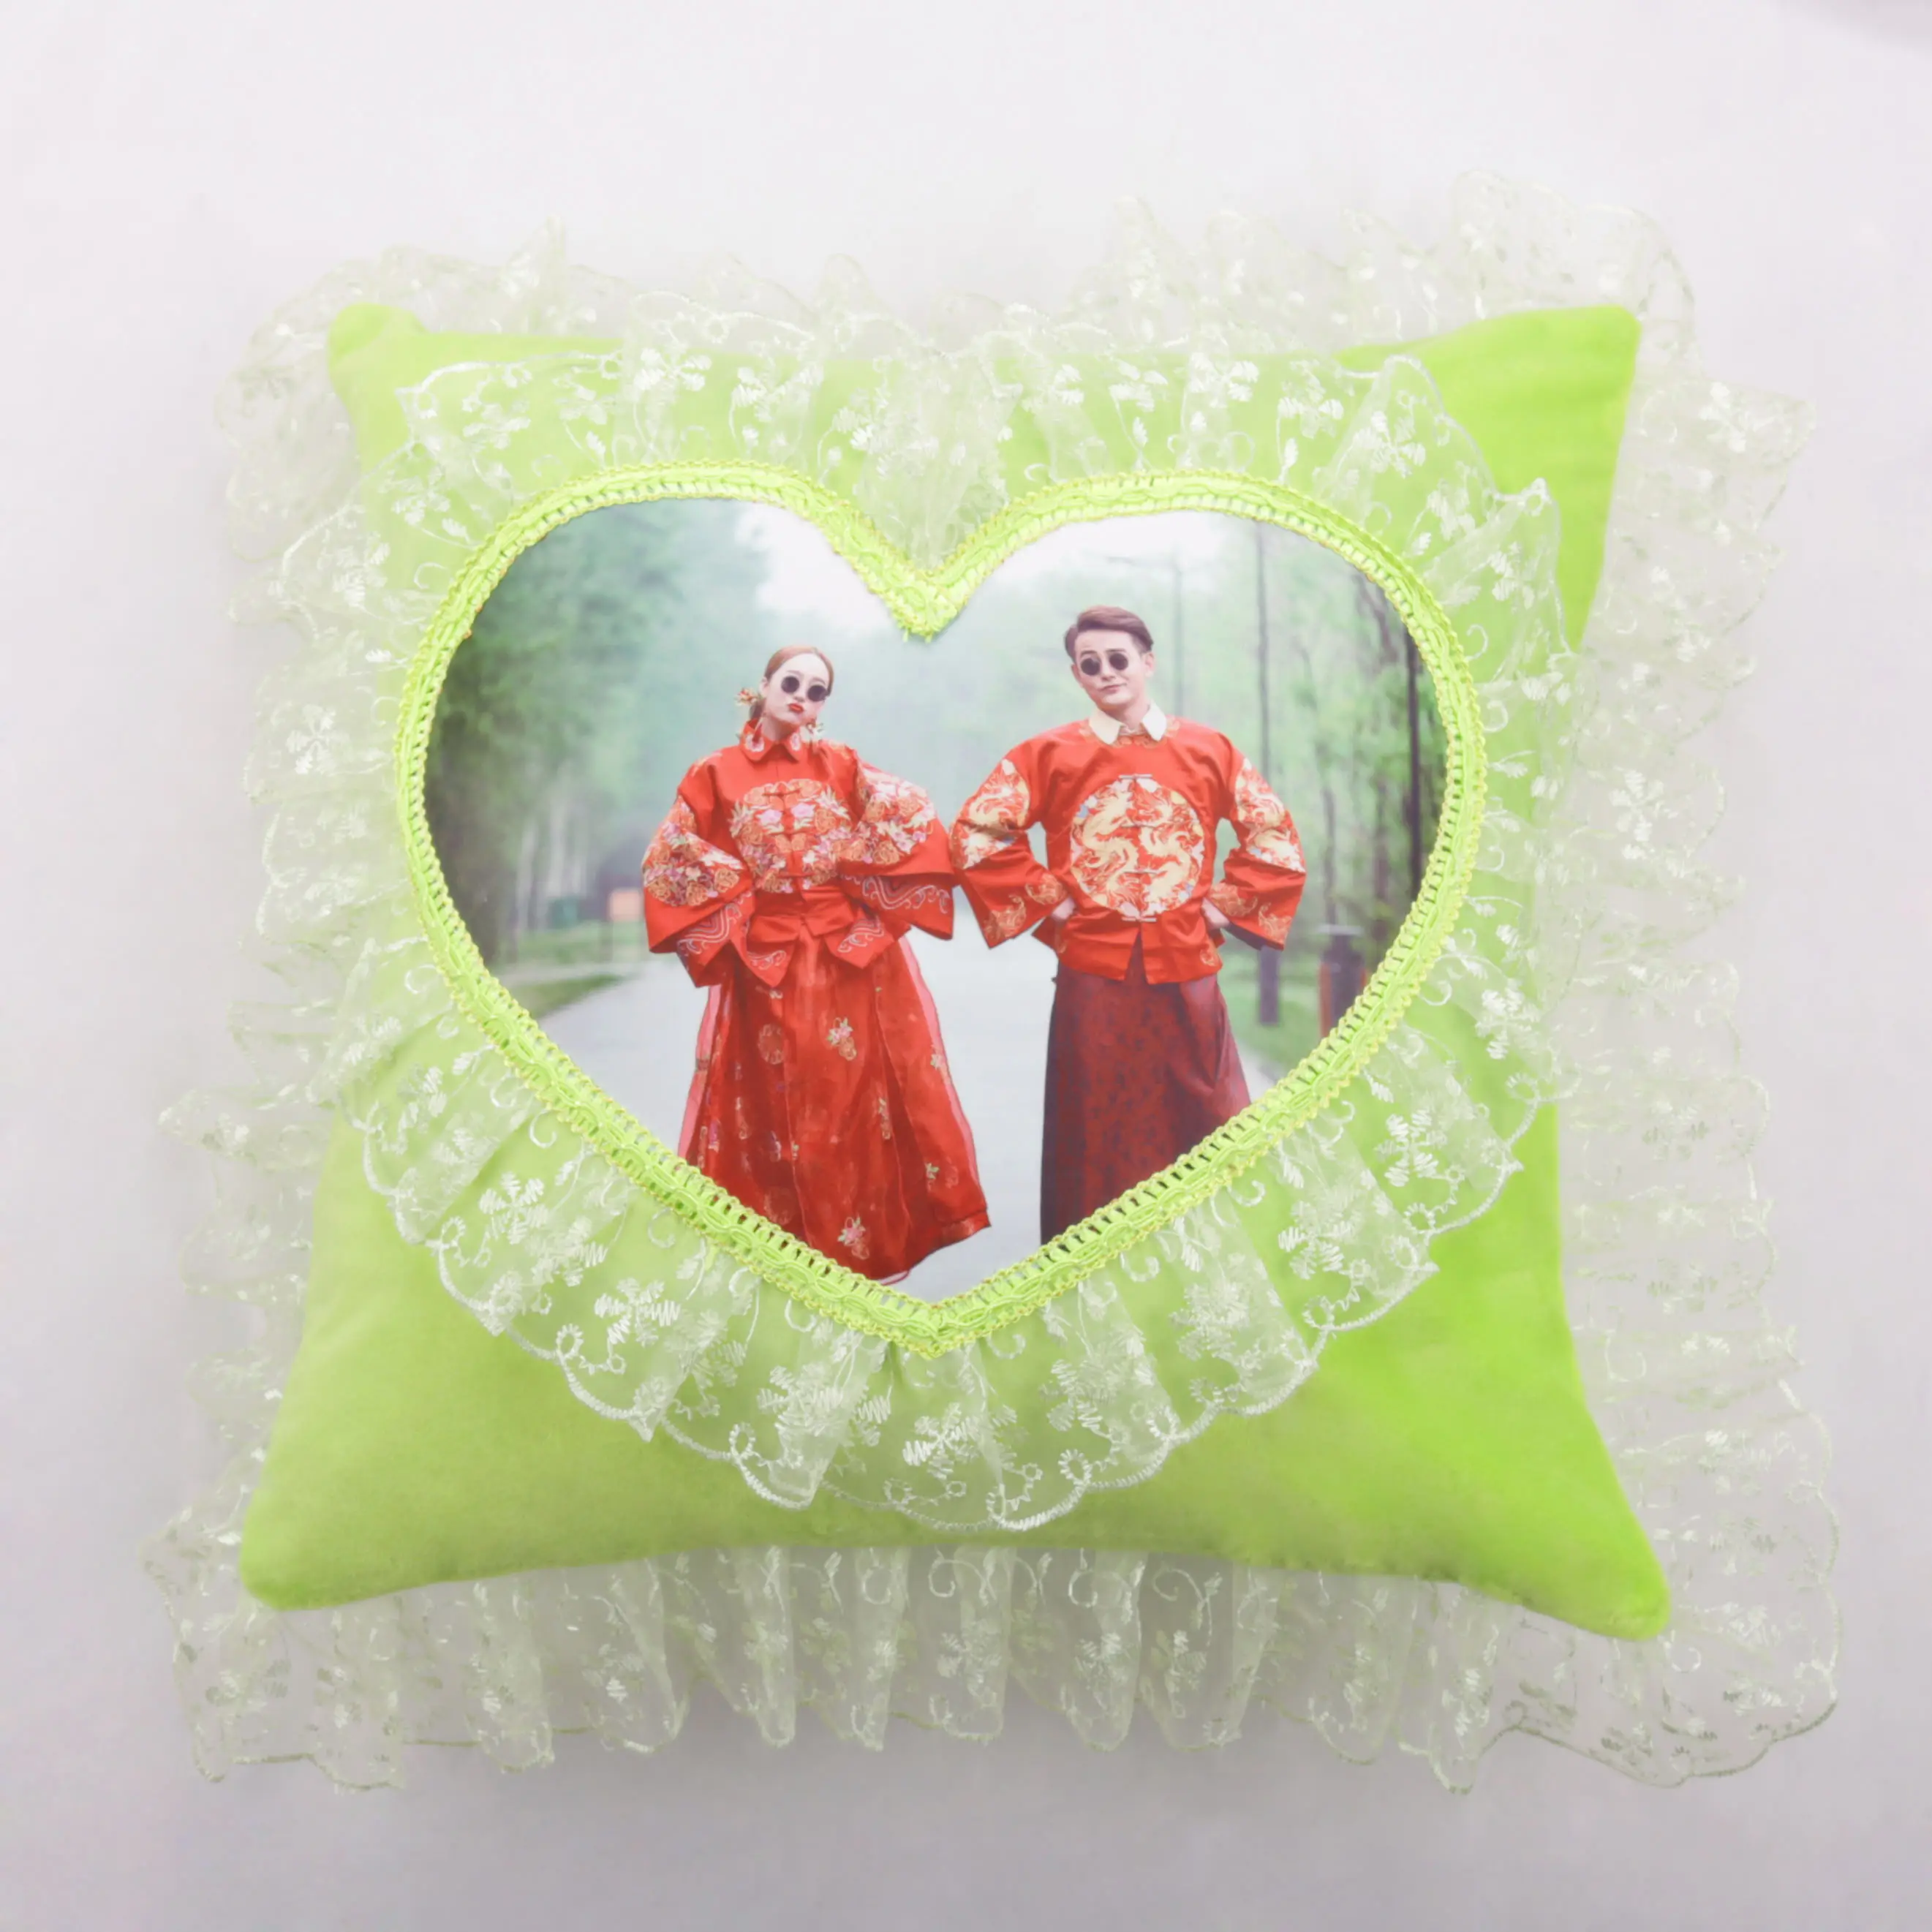 plush custom pillowcases with Digital printing sublimation pillowcases pillow covers decor pillowcases sofa decor